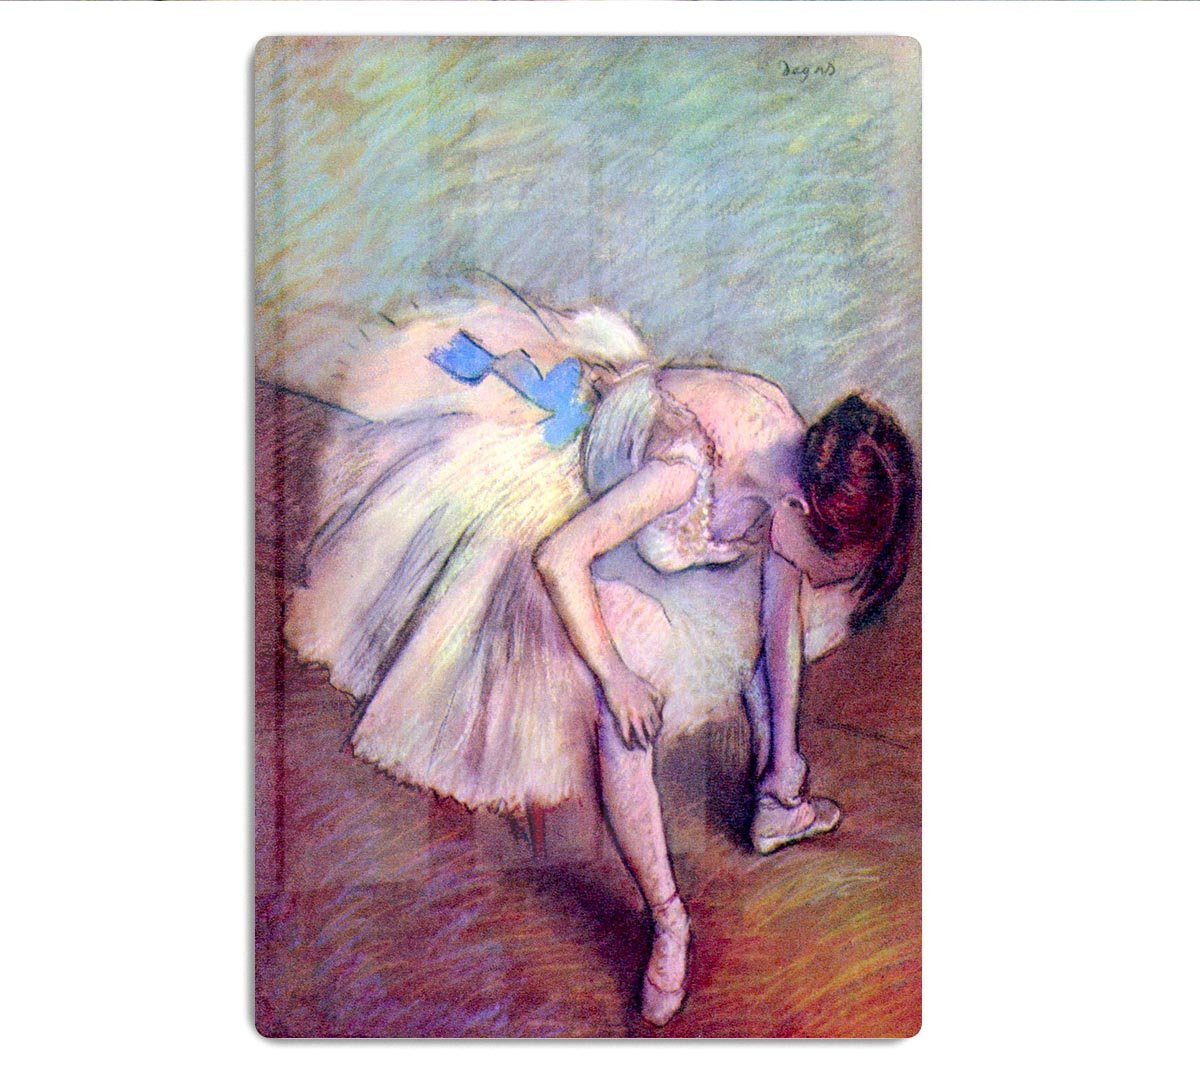 Dancer bent over by Degas HD Metal Print - Canvas Art Rocks - 1